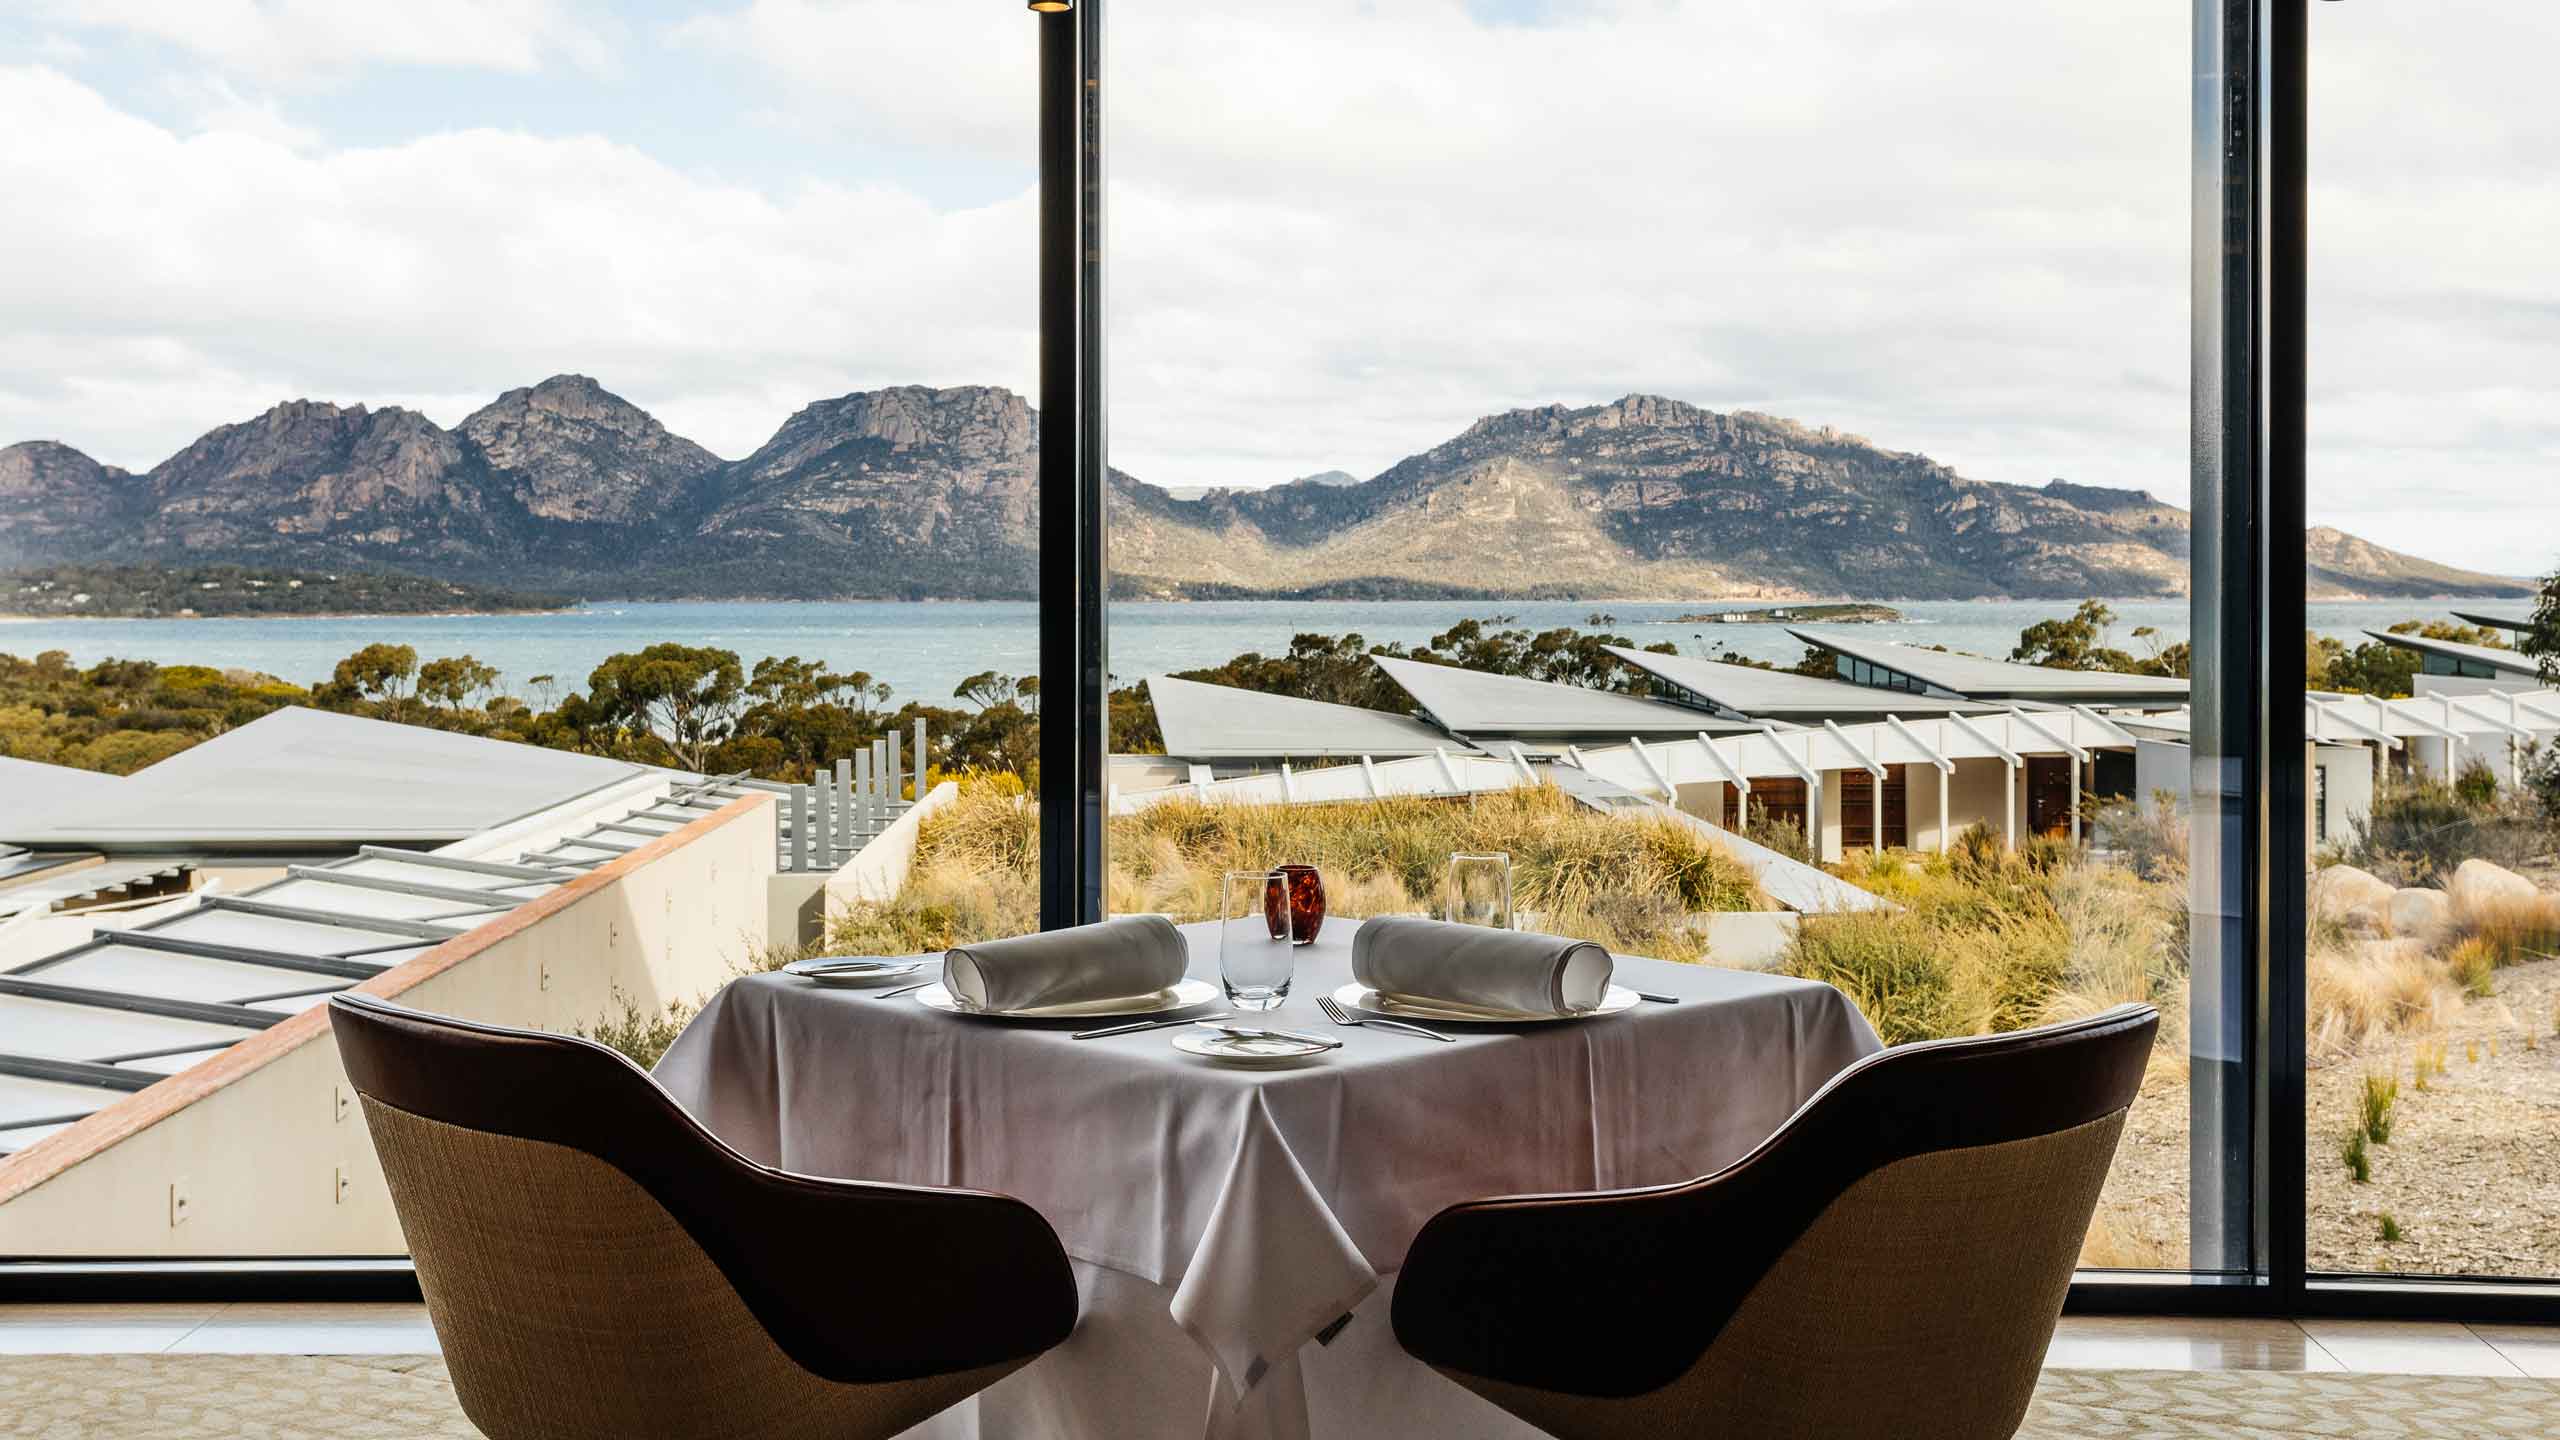 Saffire-freycinet-coles-bay-tasmania-dining-with-view